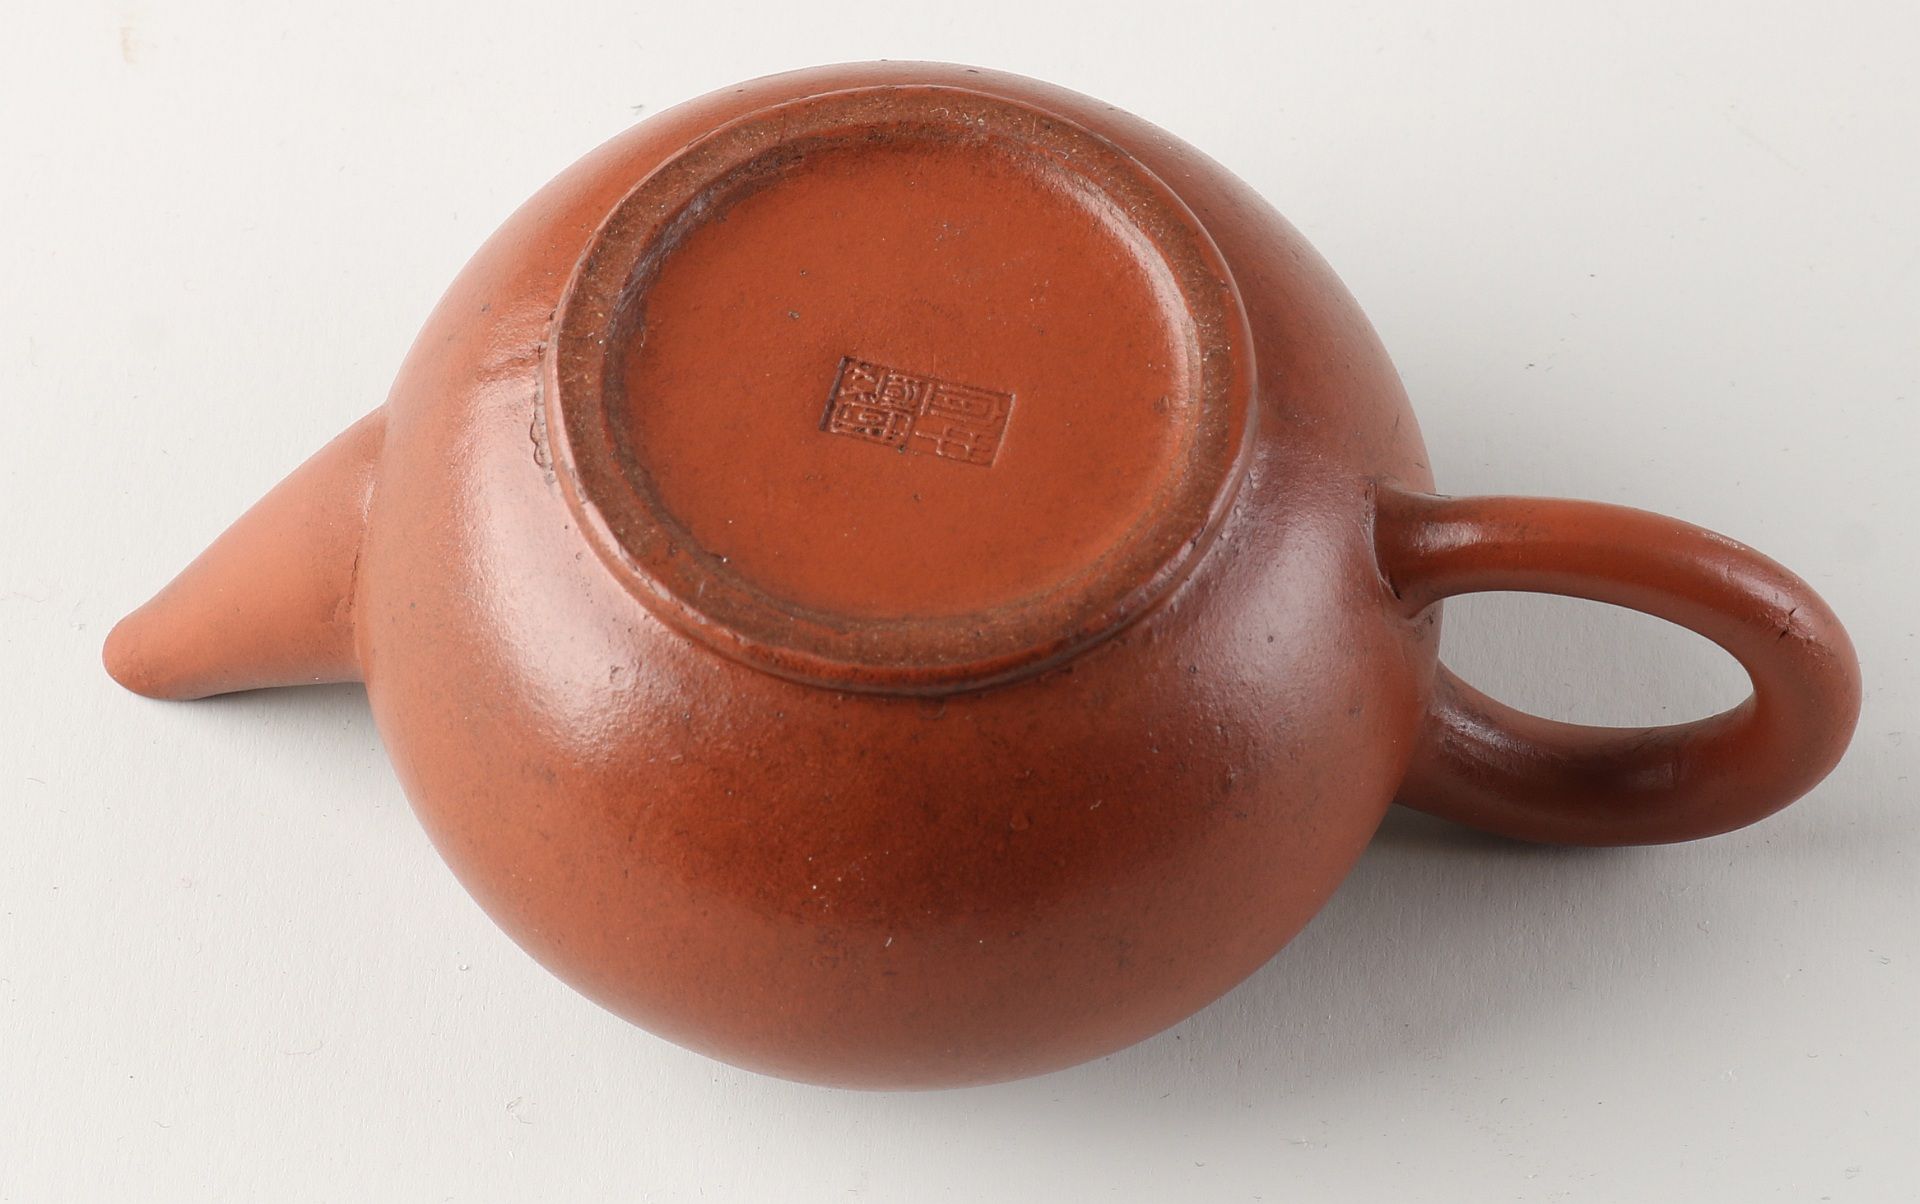 Chinese Yixing stew pot - Image 2 of 2